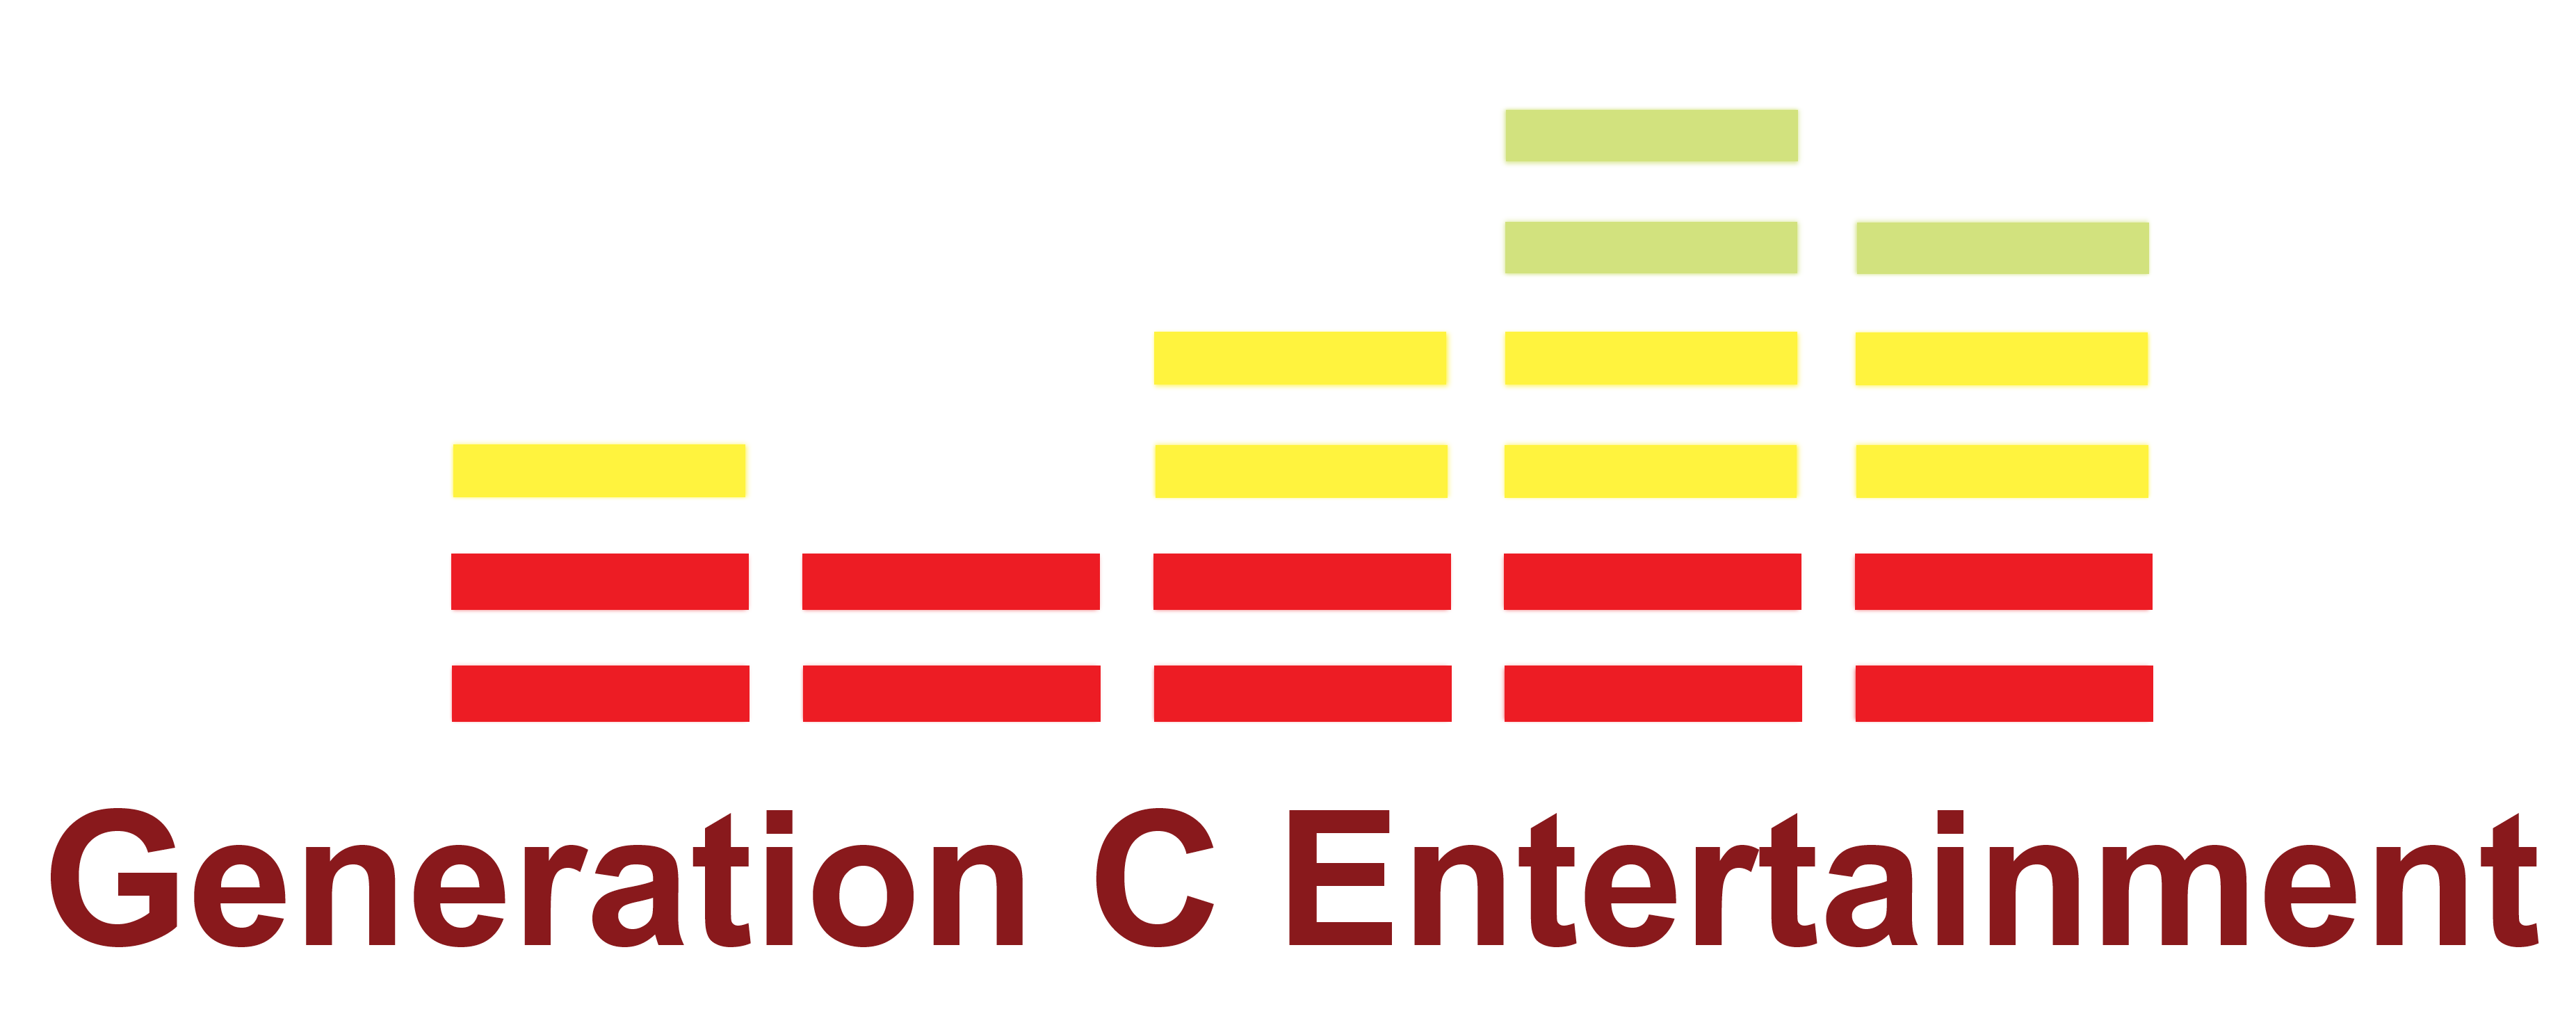 Generation C Entertainment 